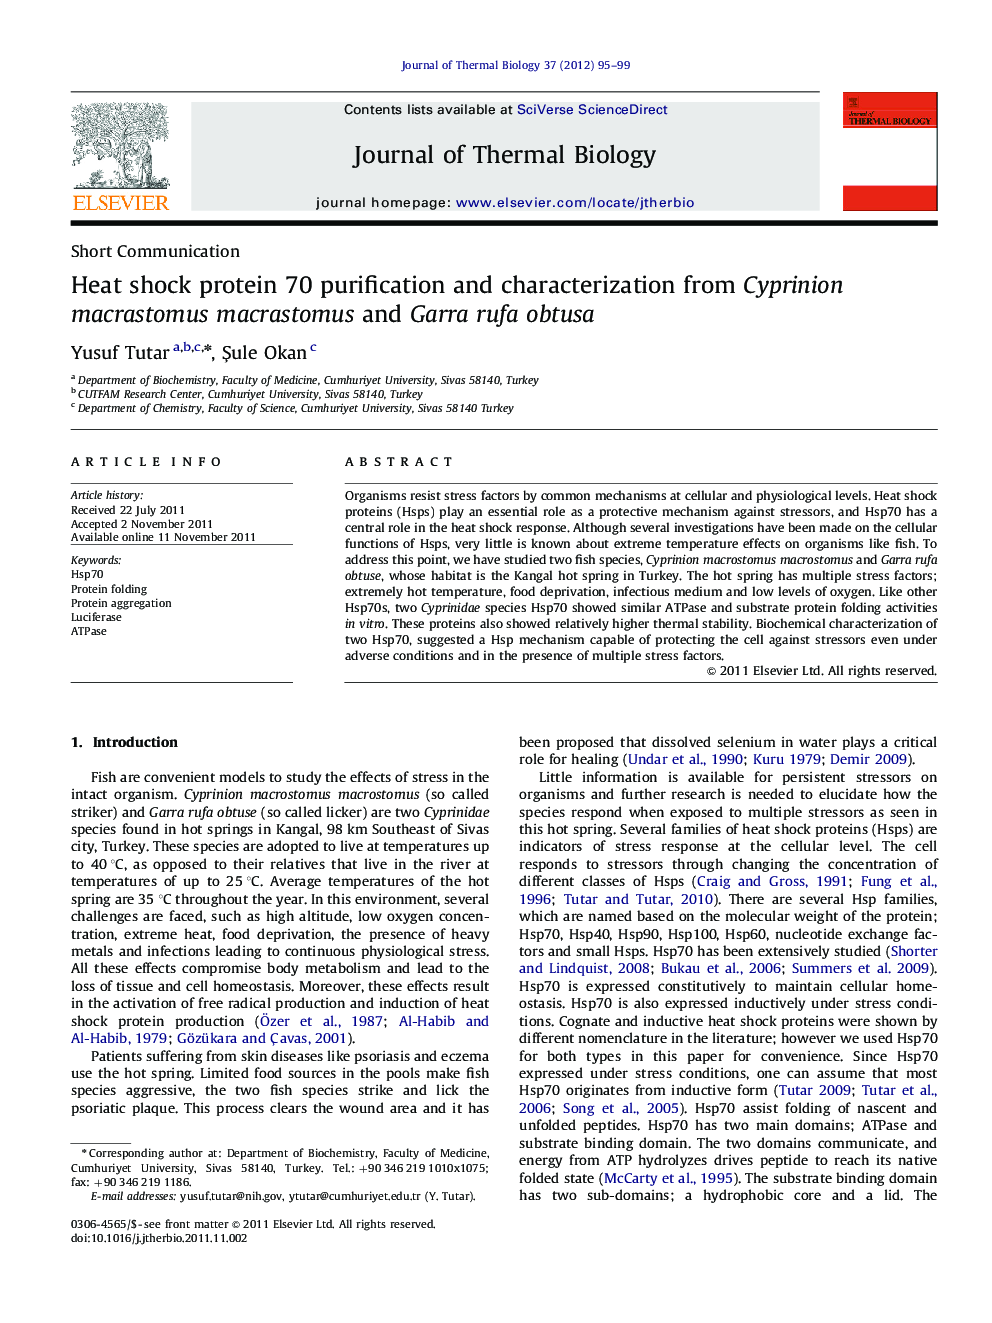 Heat shock protein 70 purification and characterization from Cyprinion macrastomus macrastomus and Garra rufa obtusa